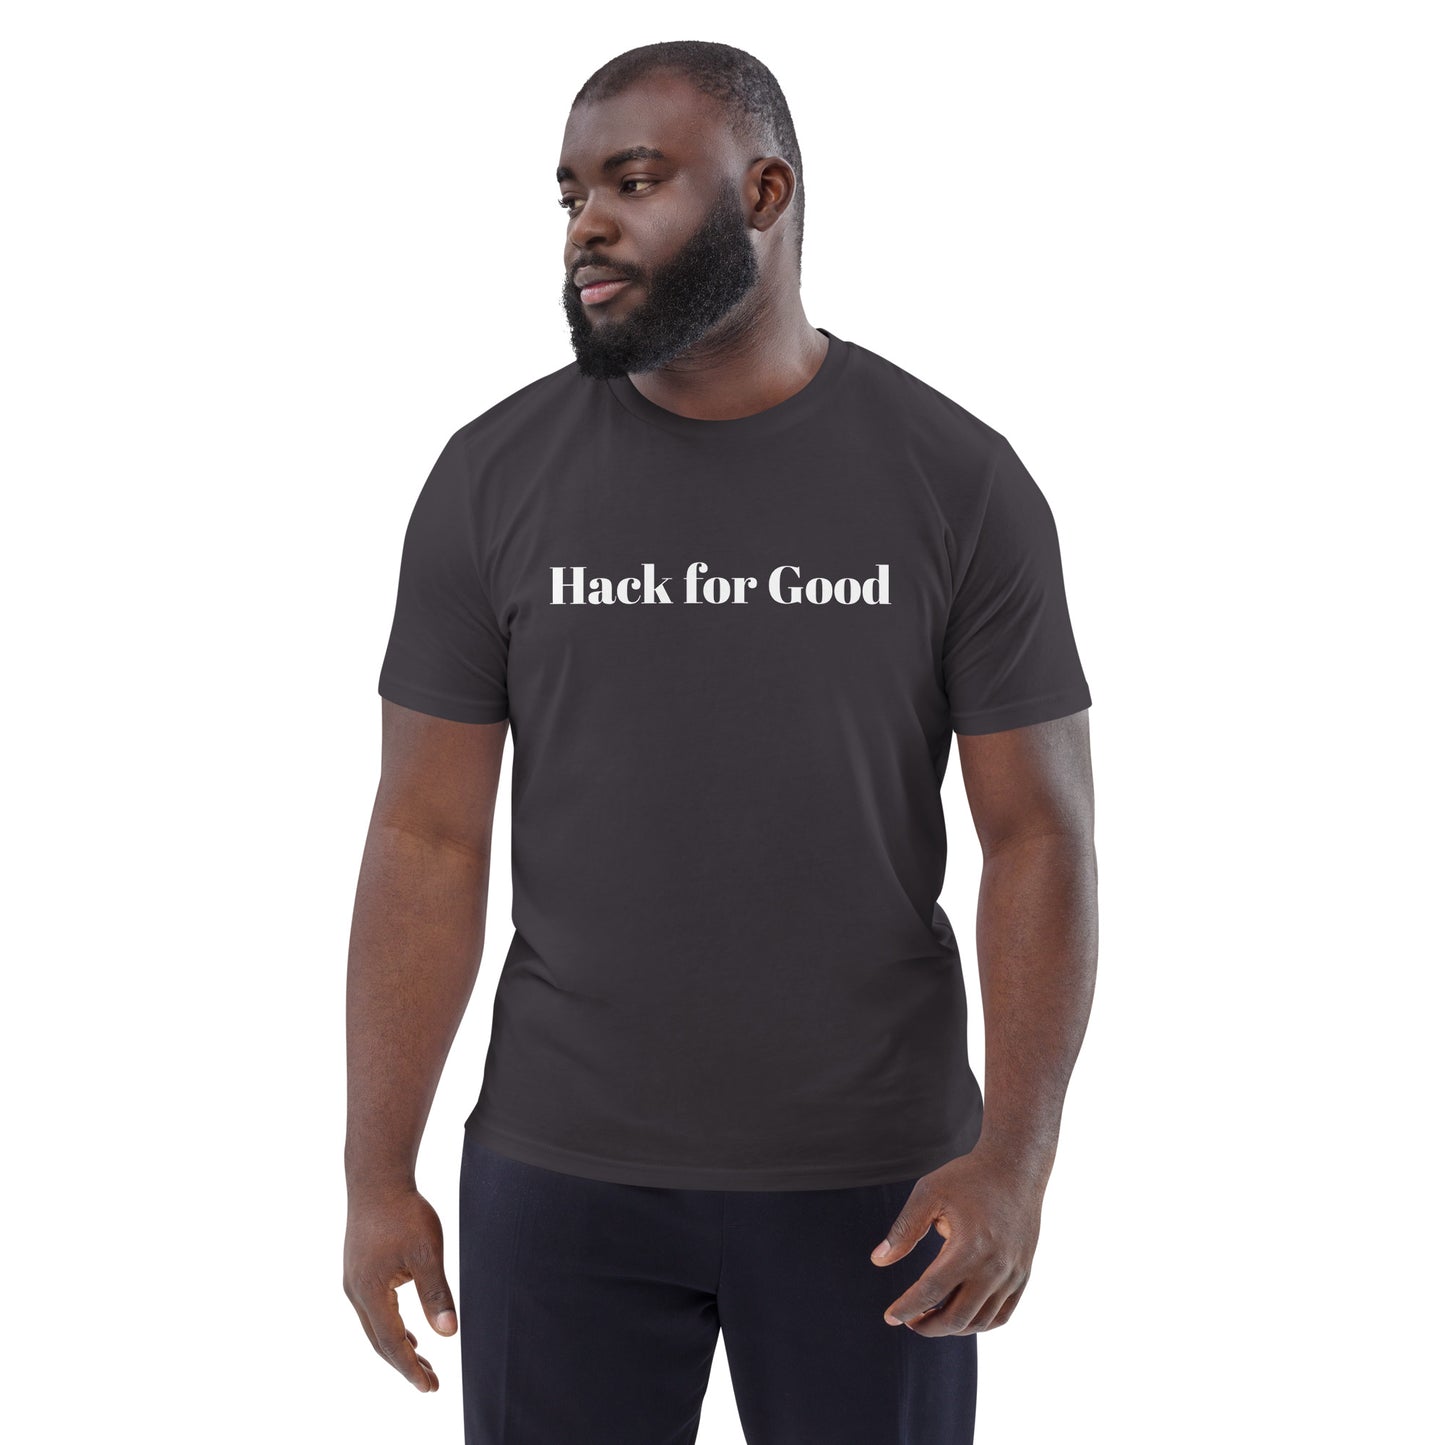 Hack for Good Camiseta unisex de algodón orgánico